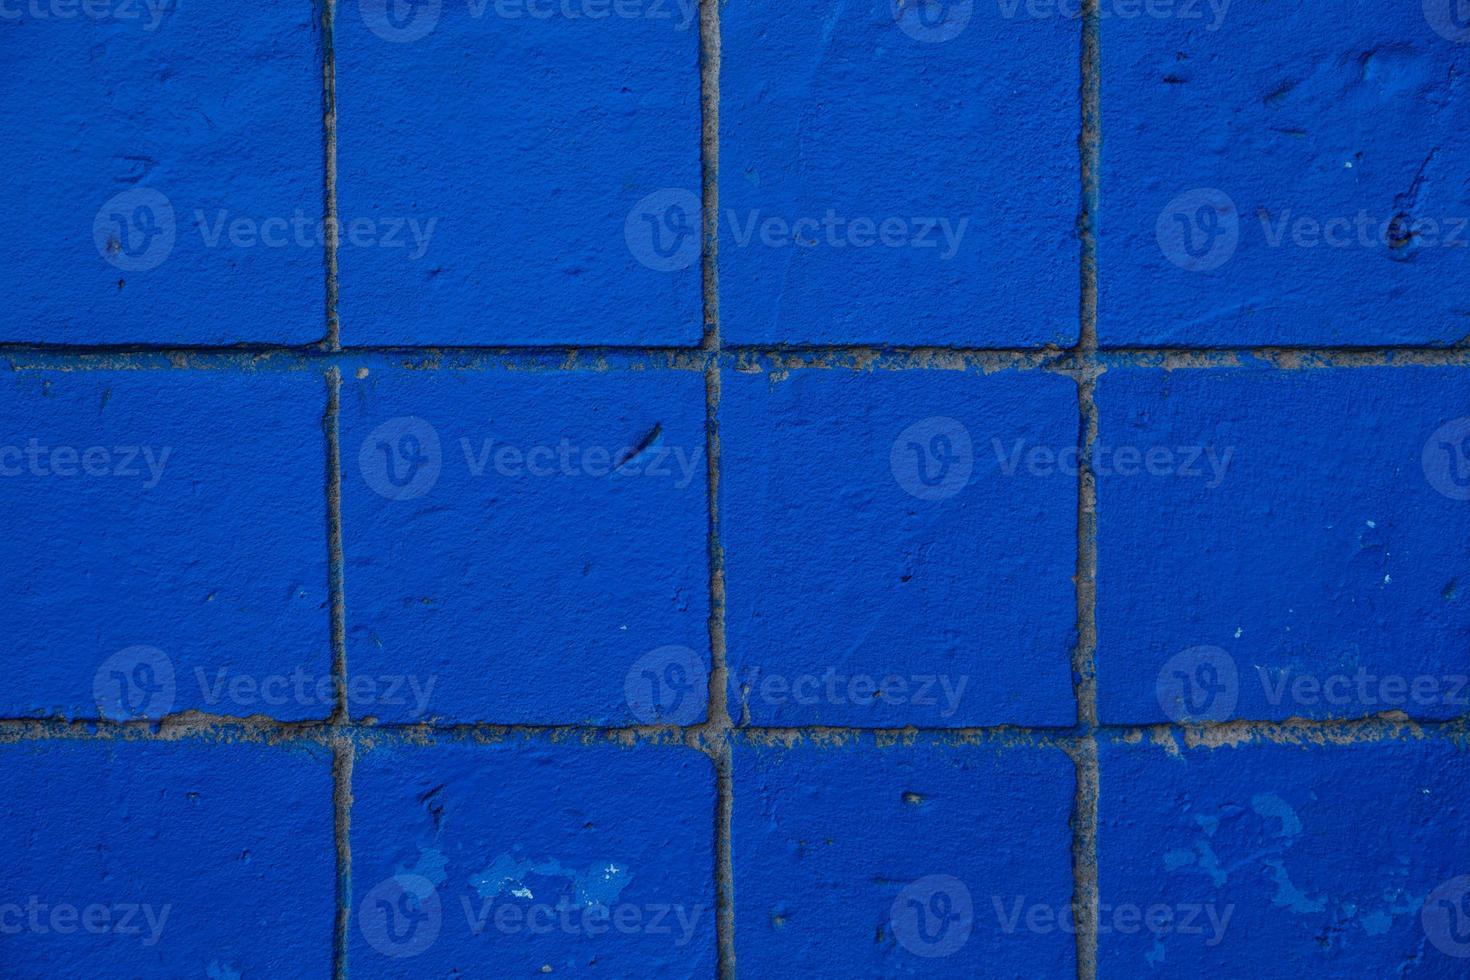 textura de fundo de parede de azulejos pequenos azulados desgastados e danificados foto